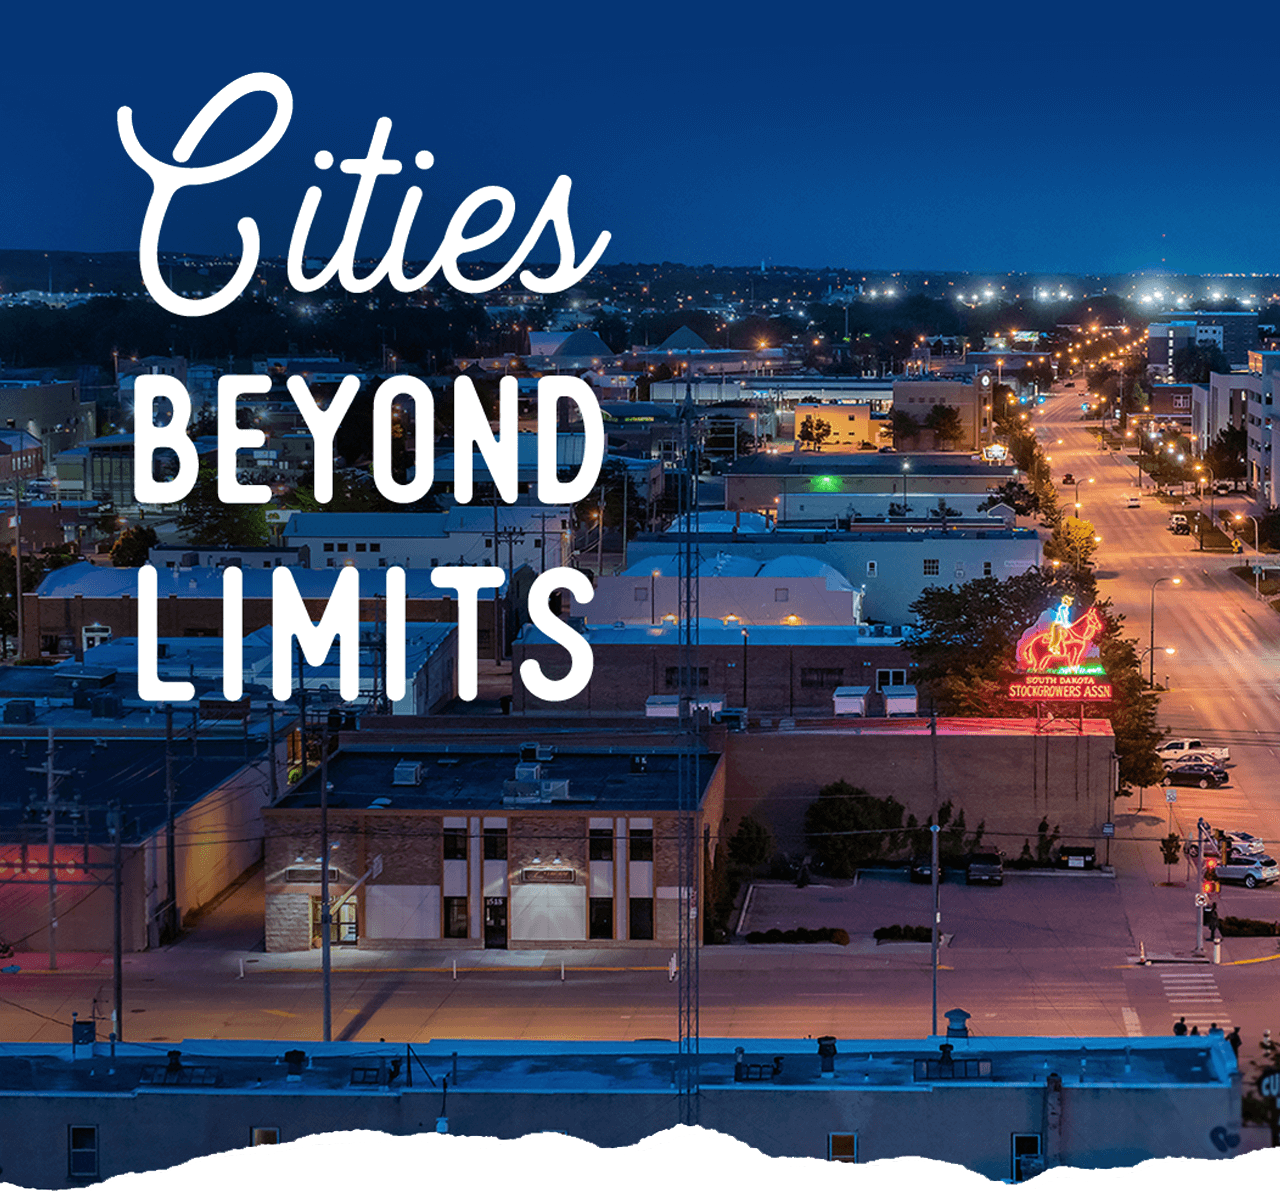 South Dakota - Cities Beyond Limits